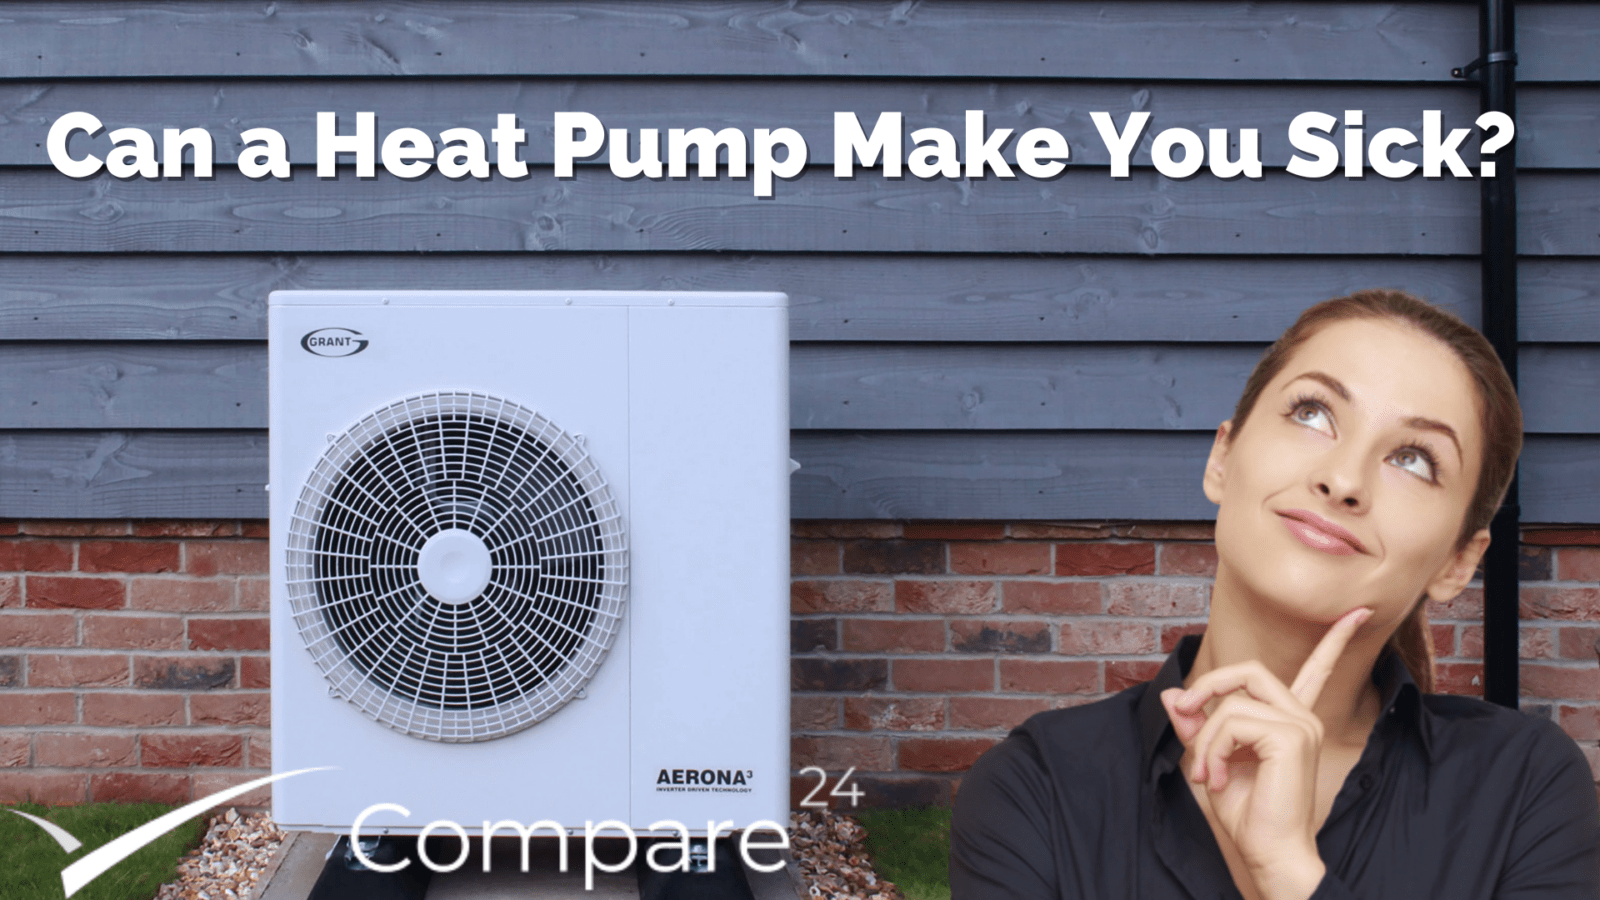 Can a heat pump make people sick